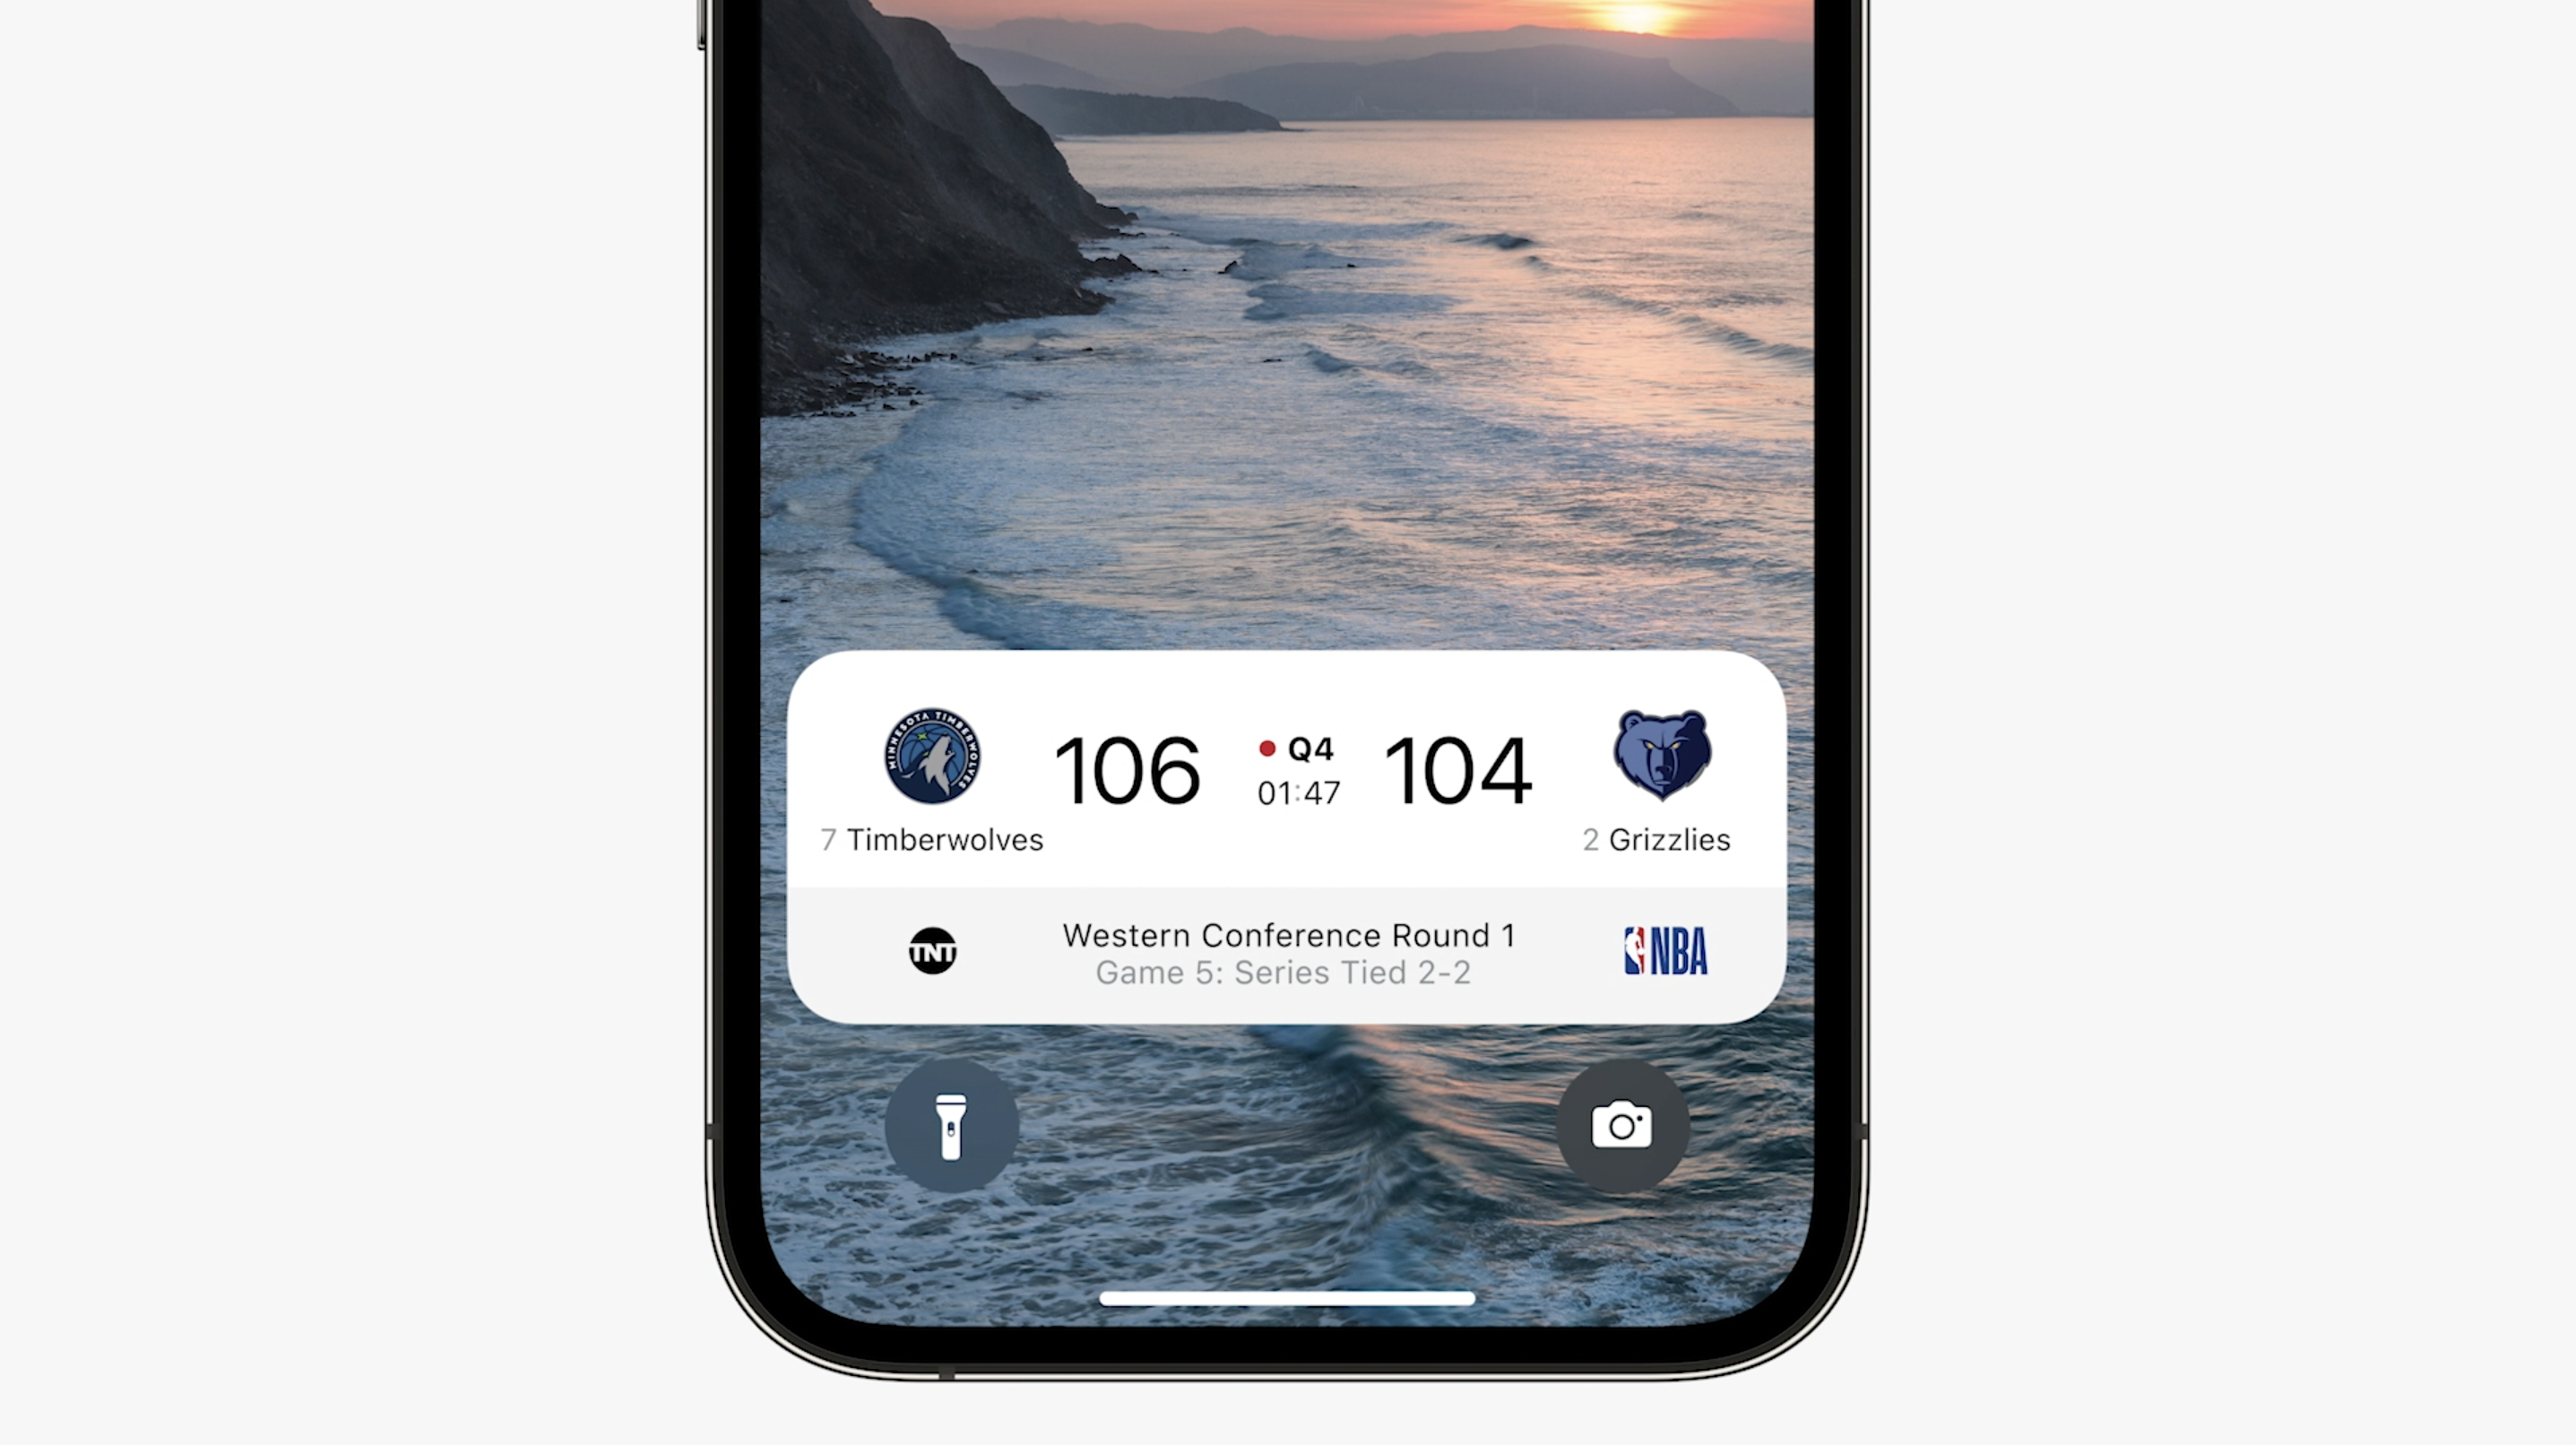 iOS 16 debut at WWDC 2022